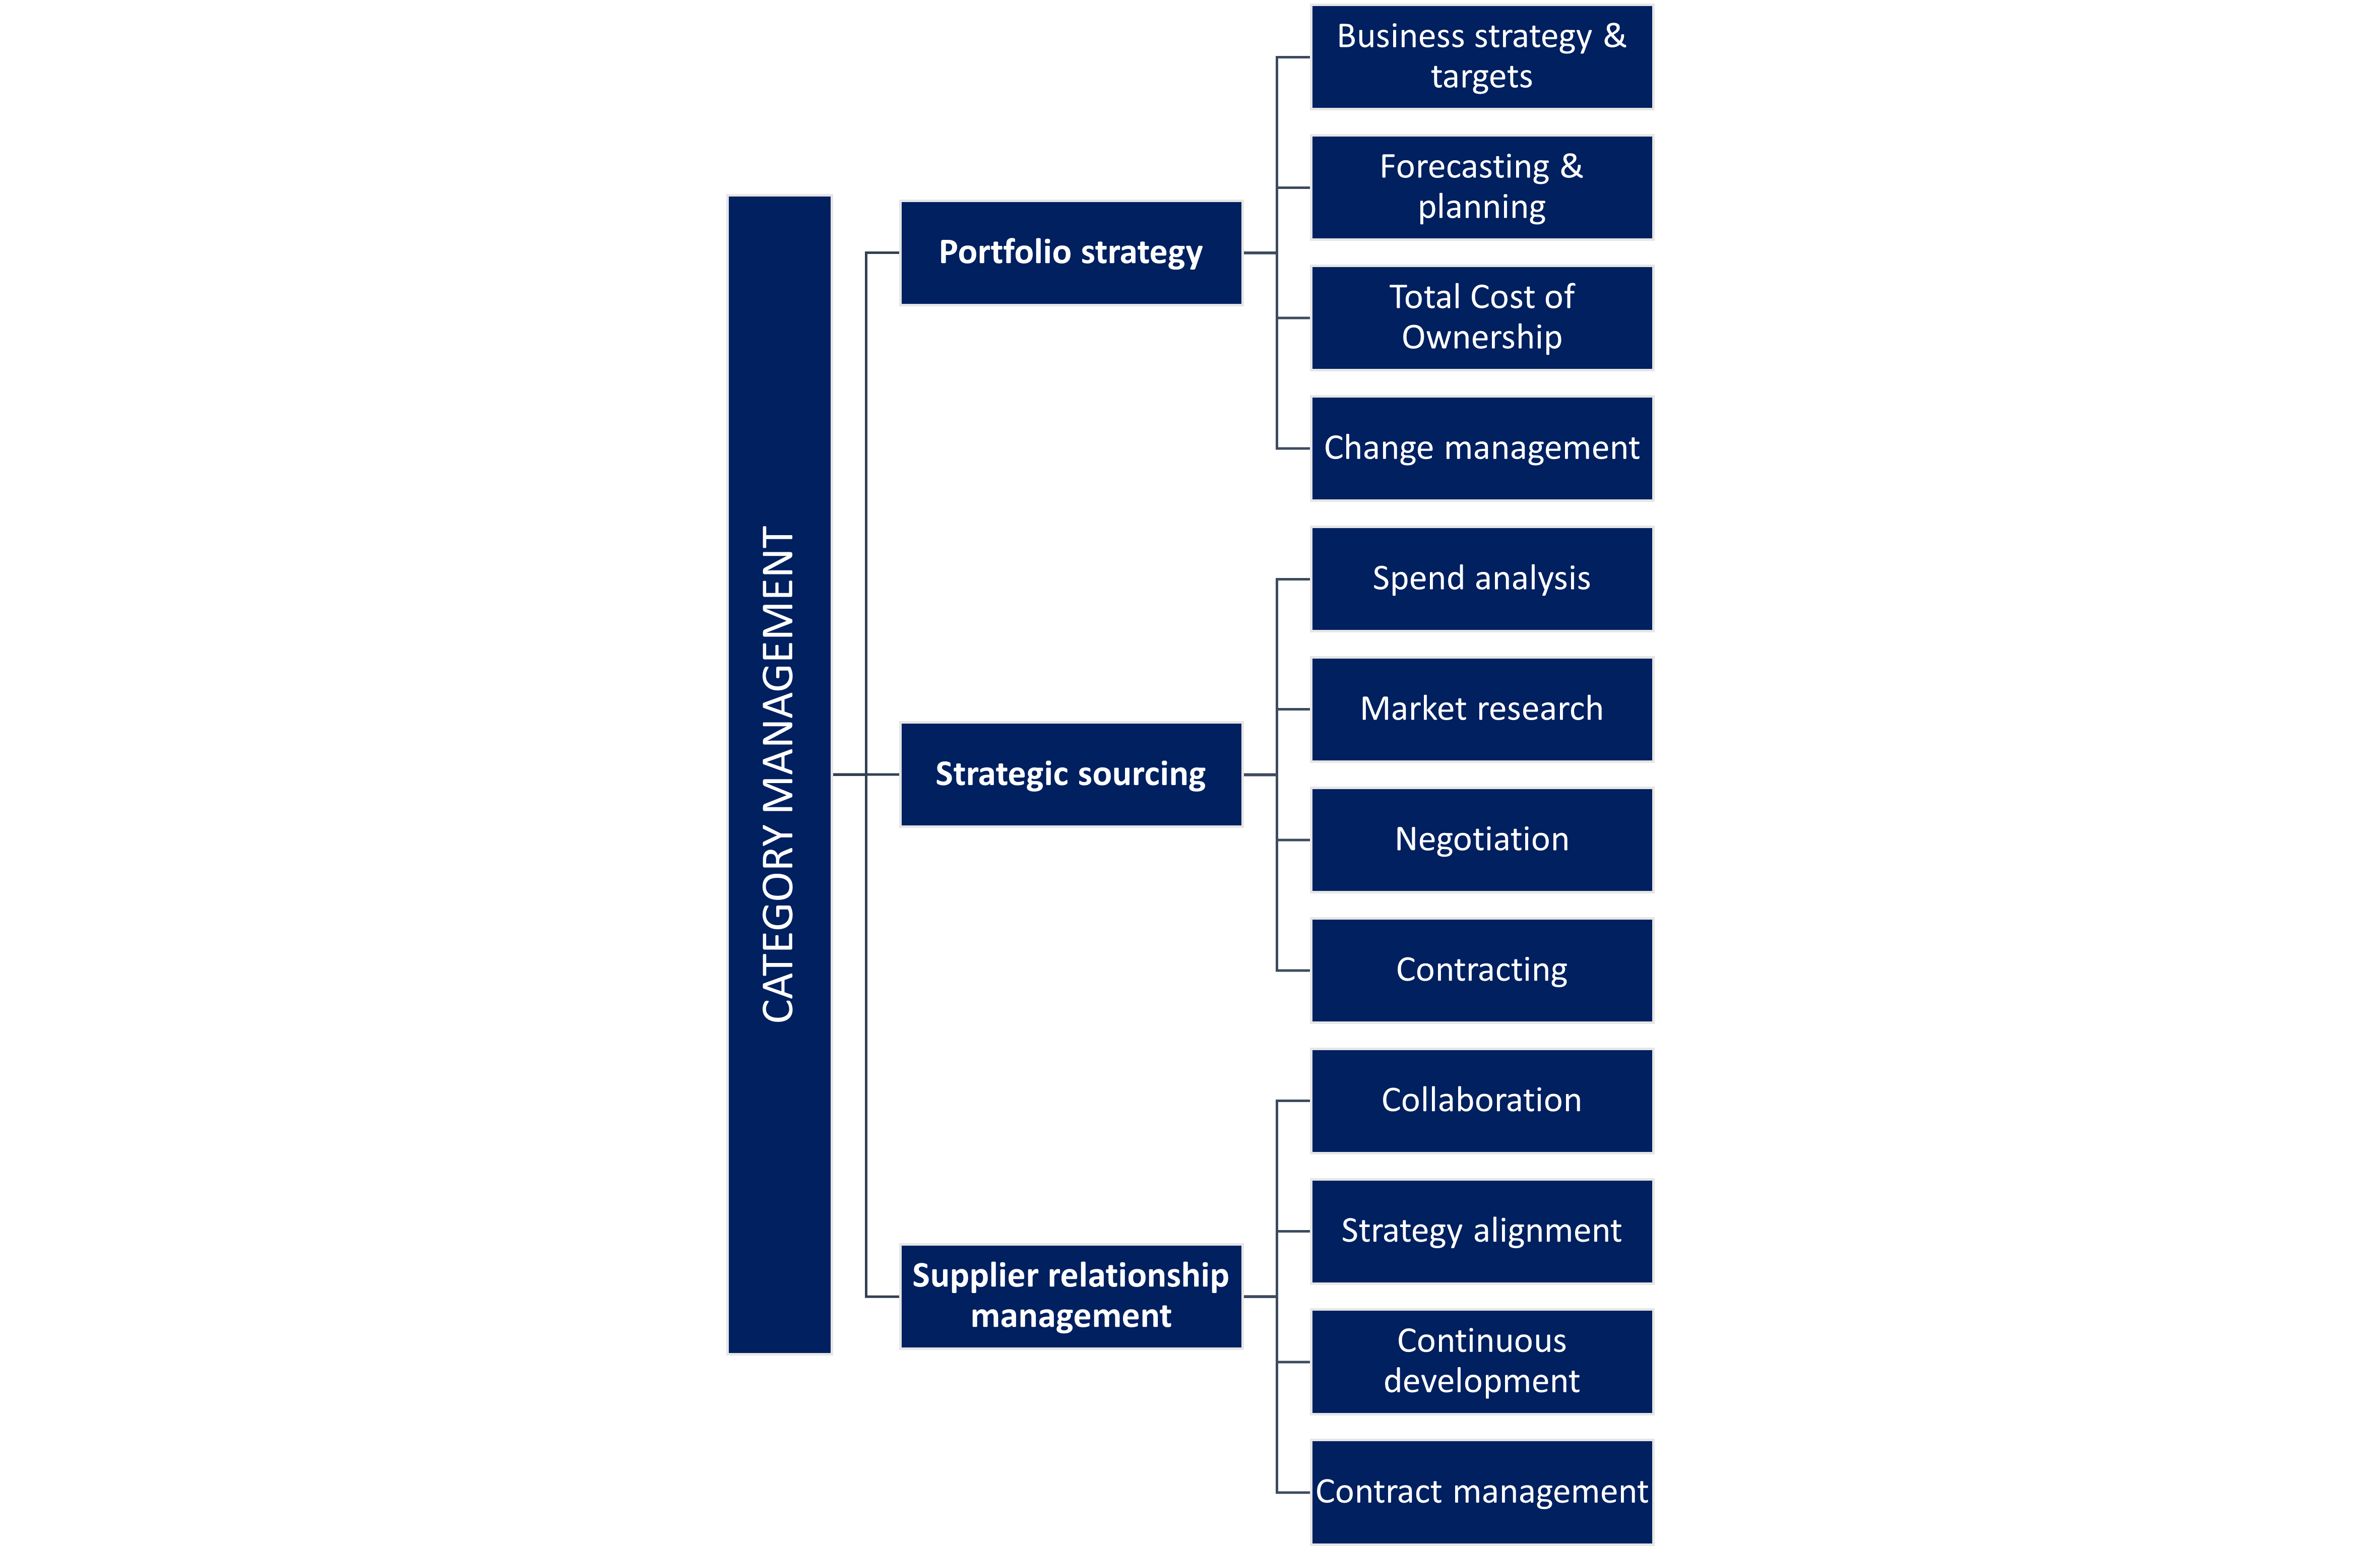 Category management framework